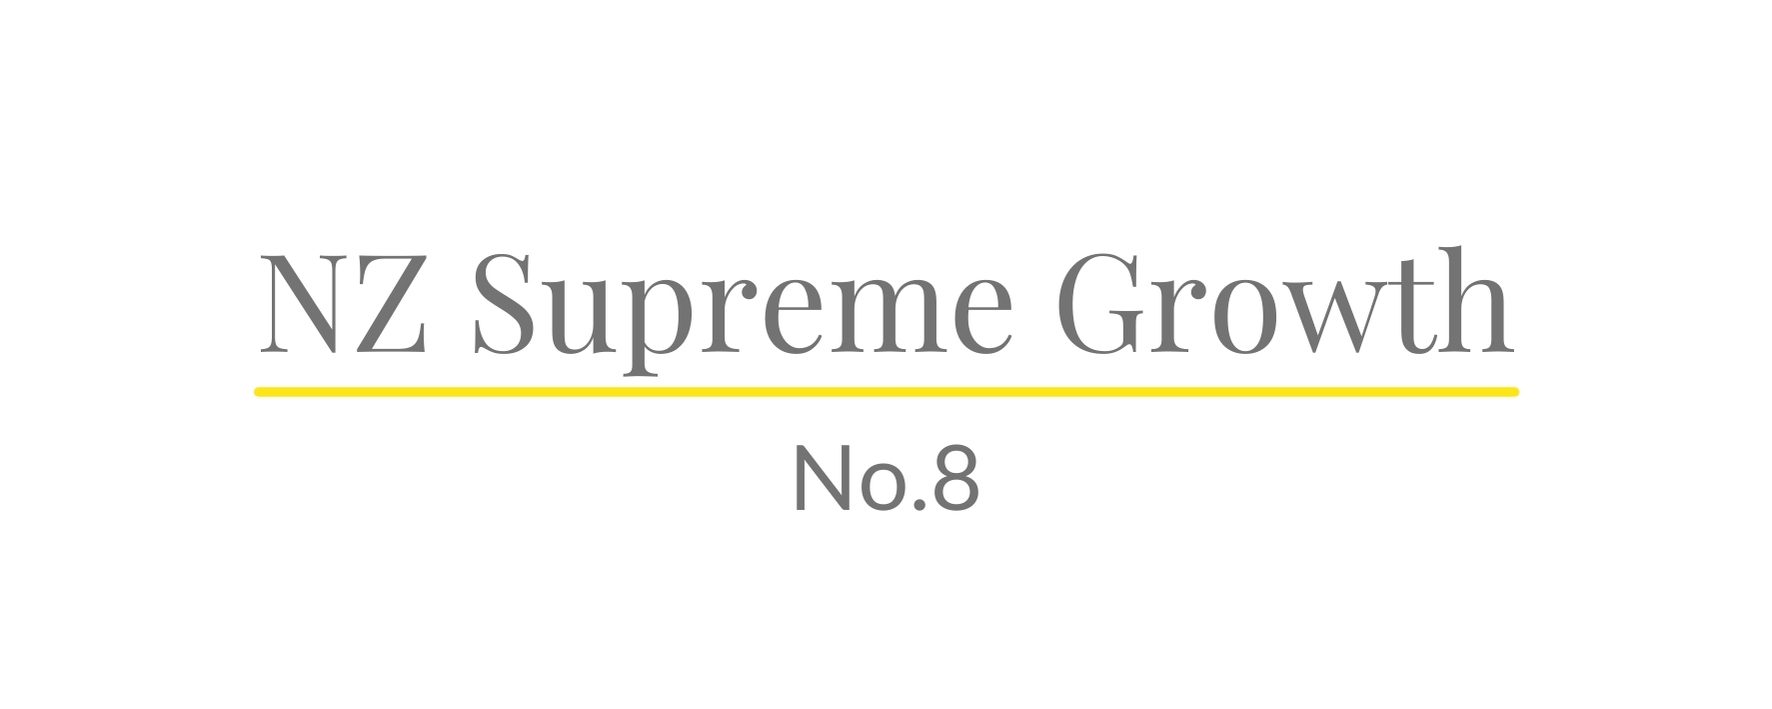 Surpreme Awards No.8 (5 x 2 cm) (2)